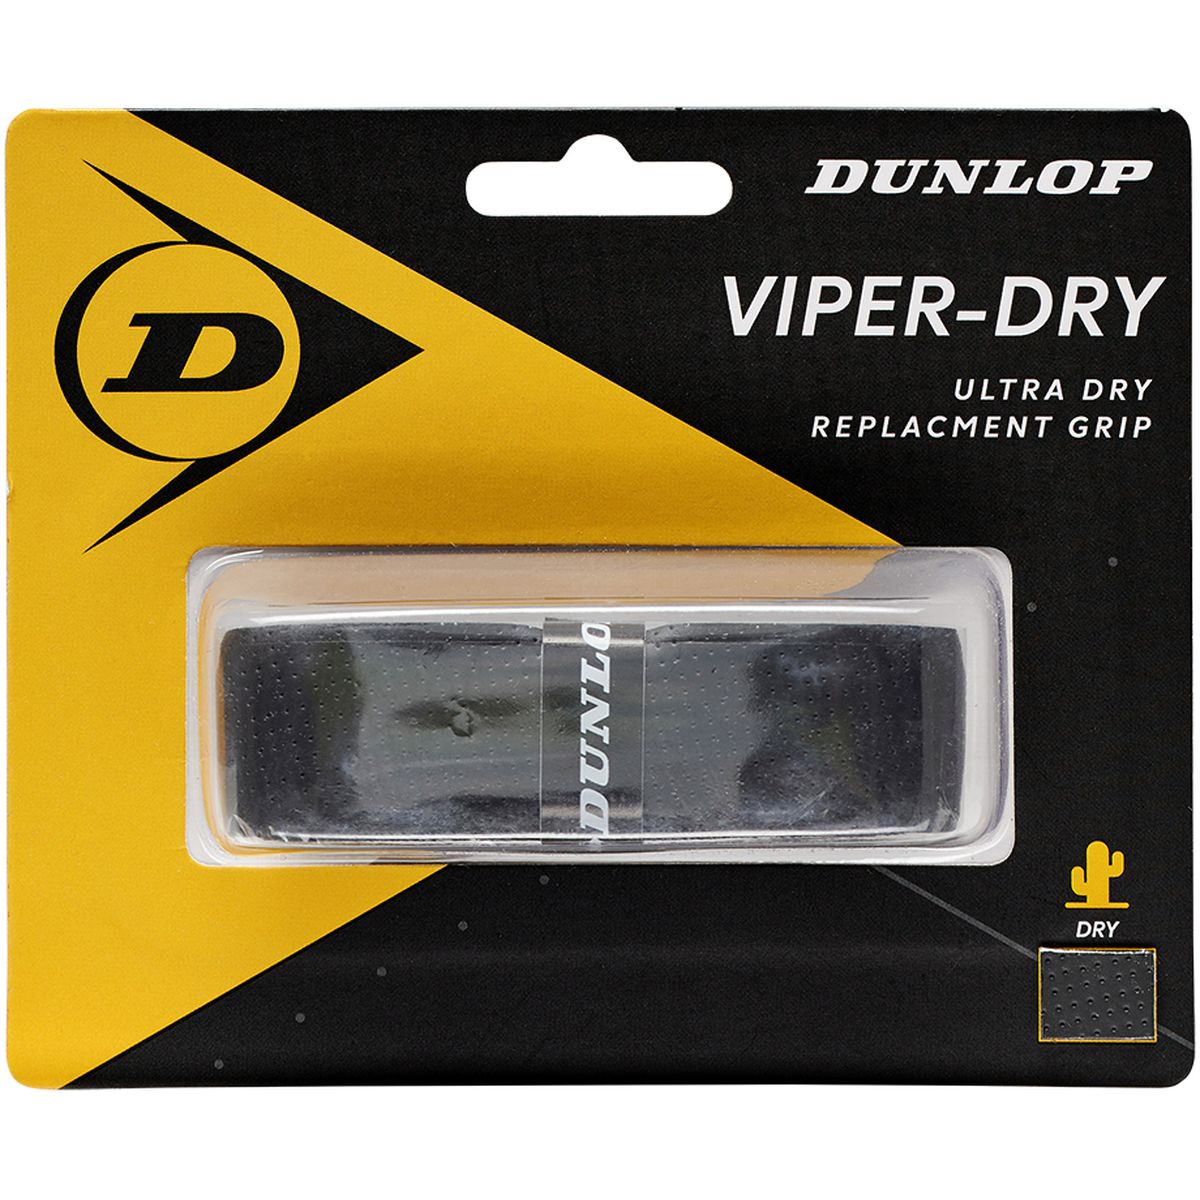 Dunlop D Tac Viperdry Replacement Grip Griffband